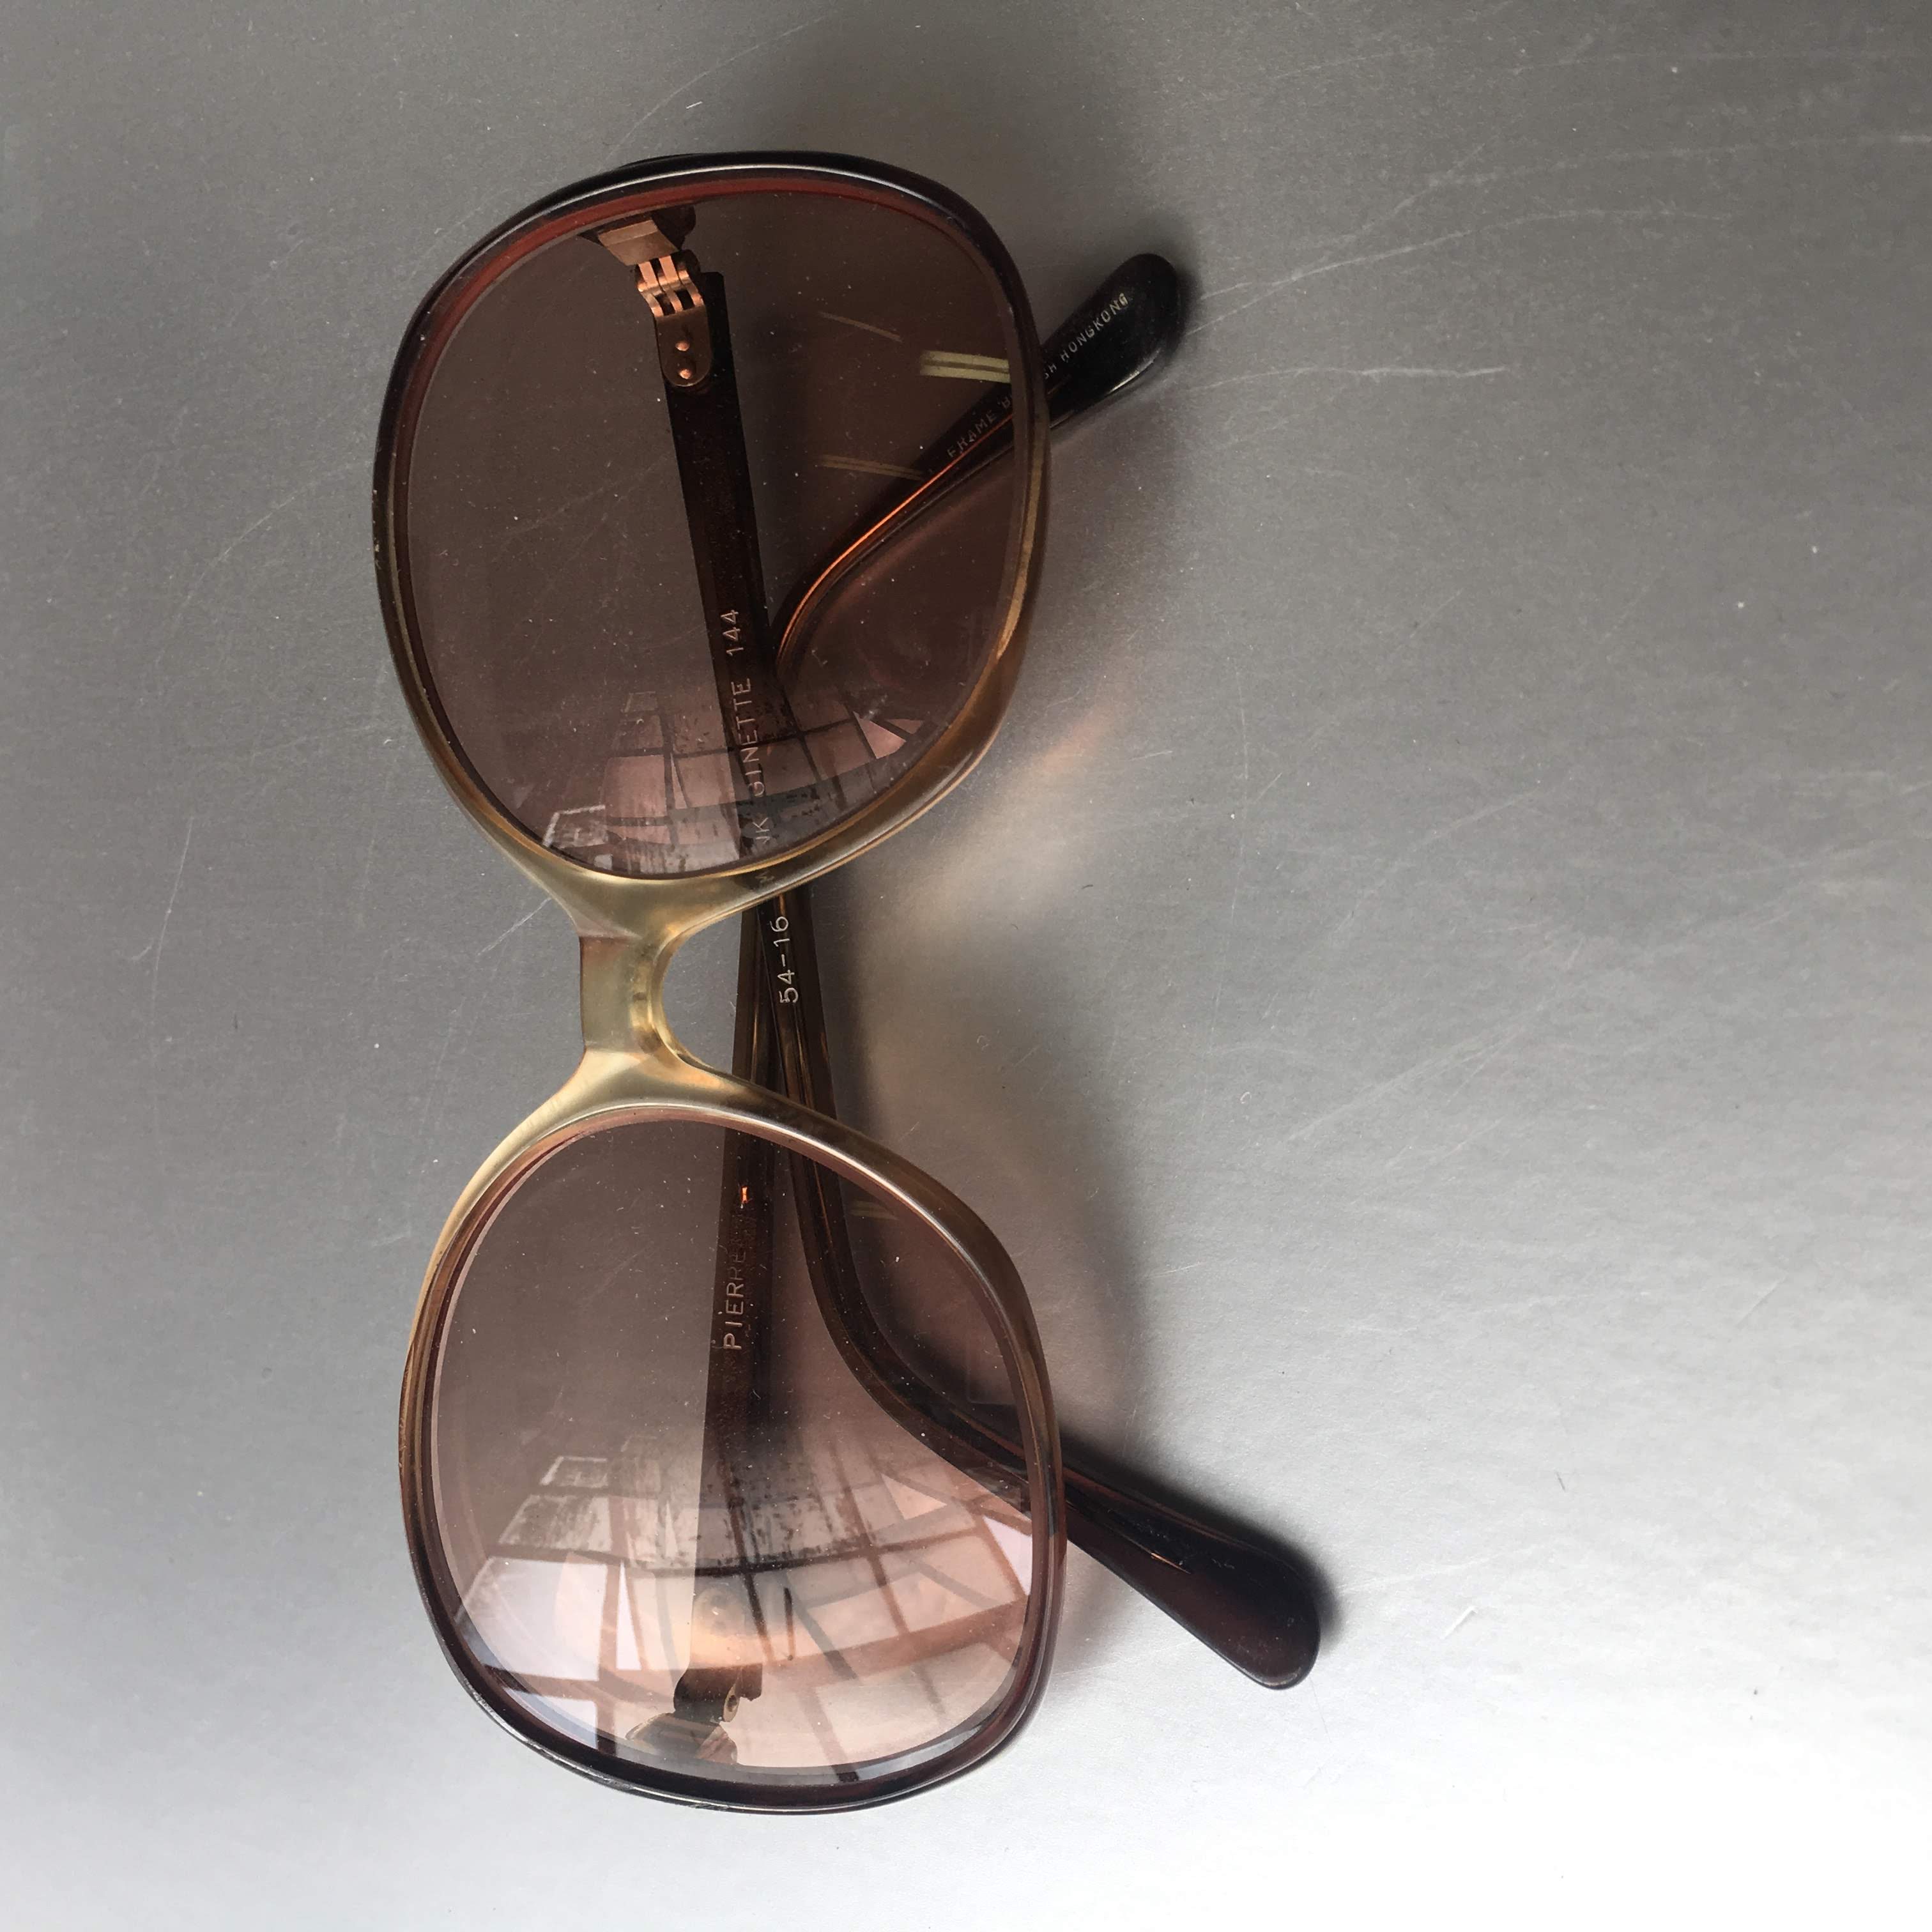 Pierre Cardin Brown Sunglasses Vintage Accessory Eyewear